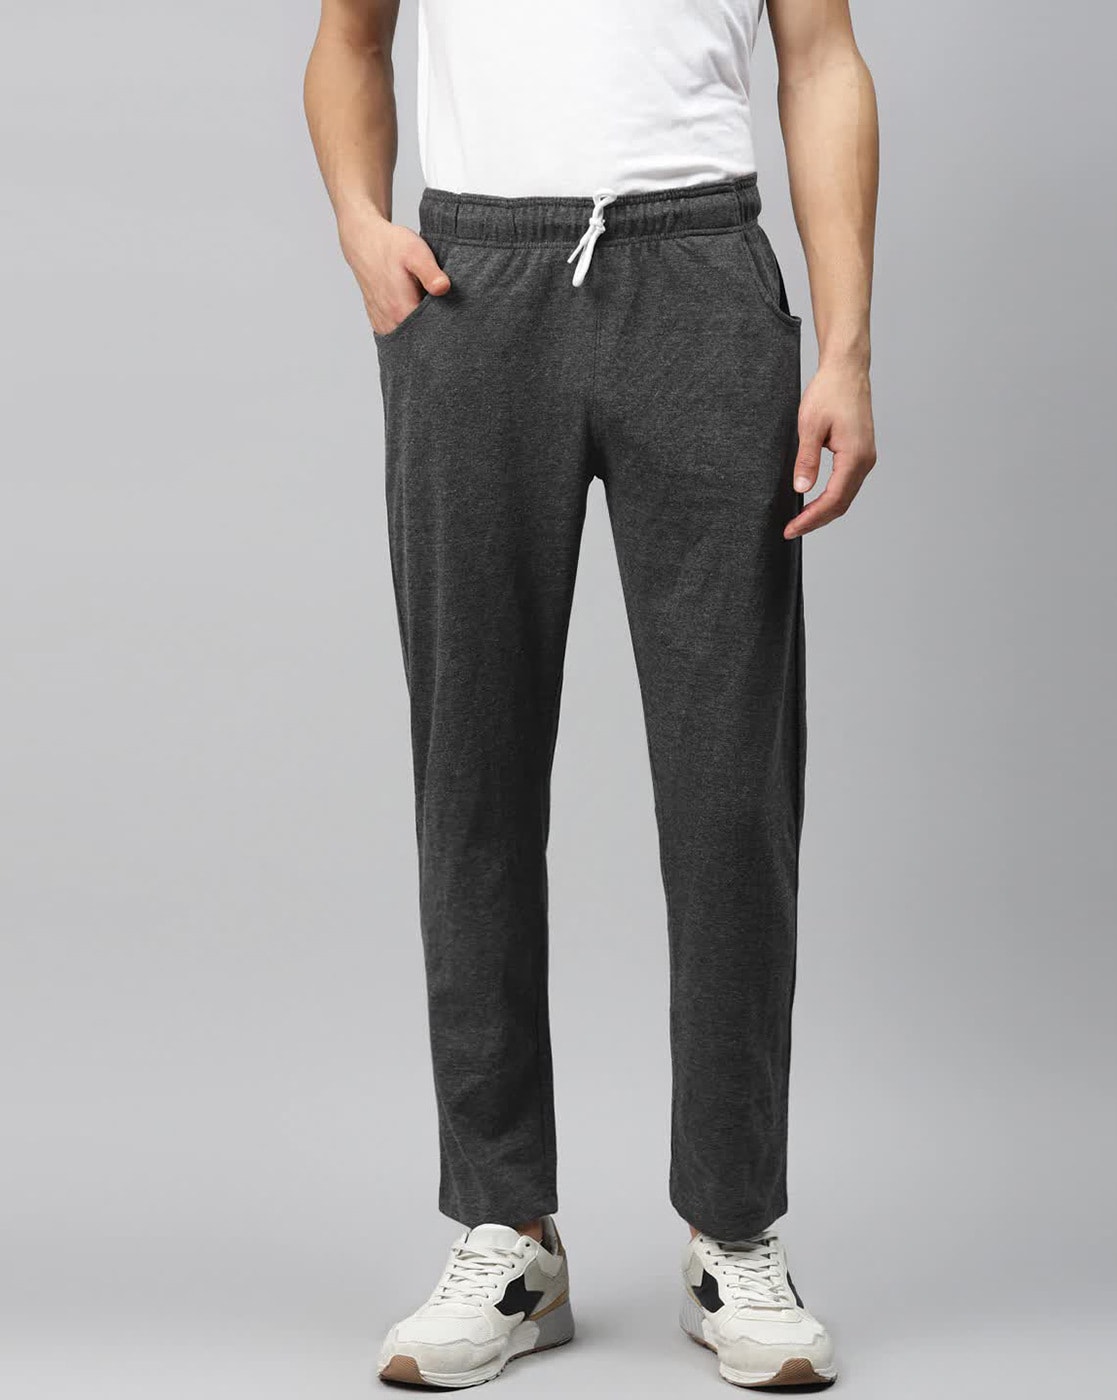 Hubberholme Women's Cotton Blend Regular Fit Side Stripe Track Pants (Tan,  26) : Amazon.in: Fashion